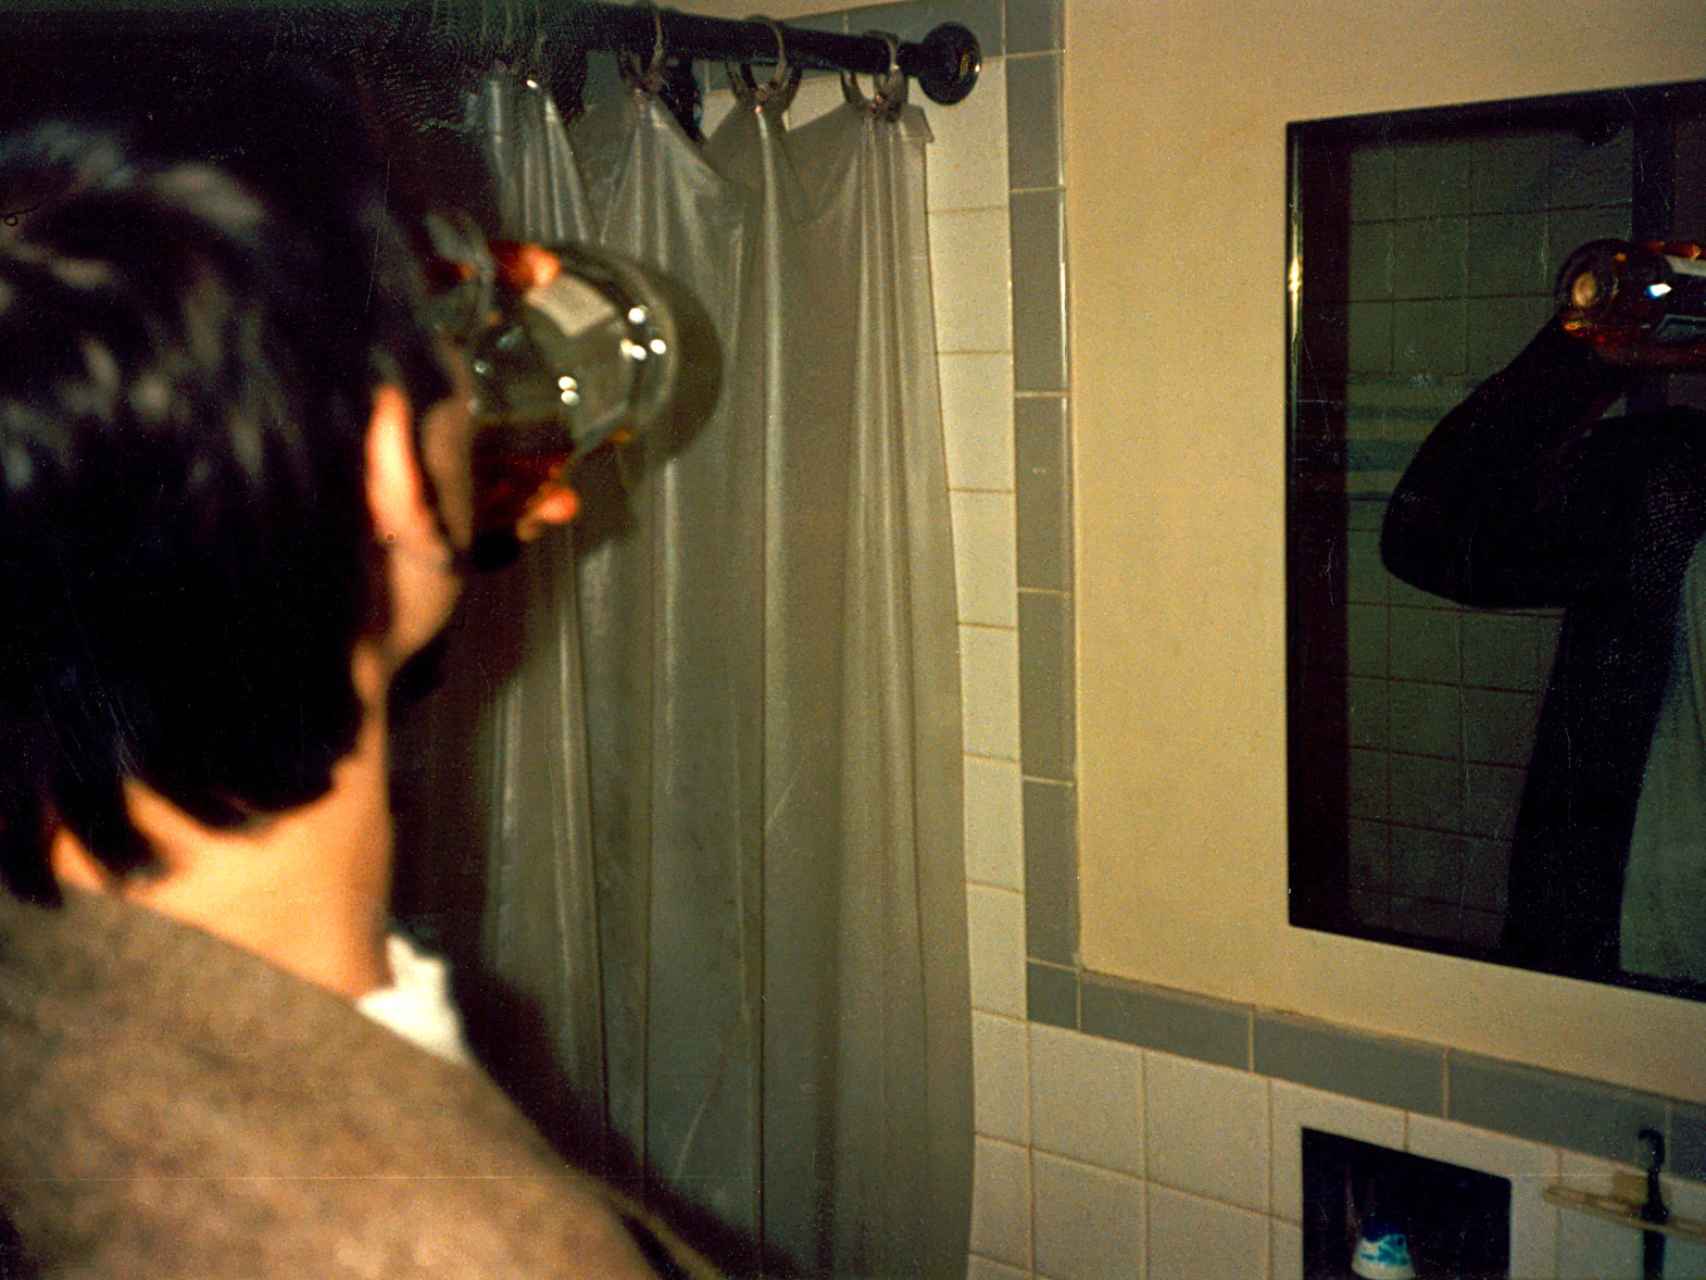 Un joven degusta un chupito de colutorio frente al espejo.